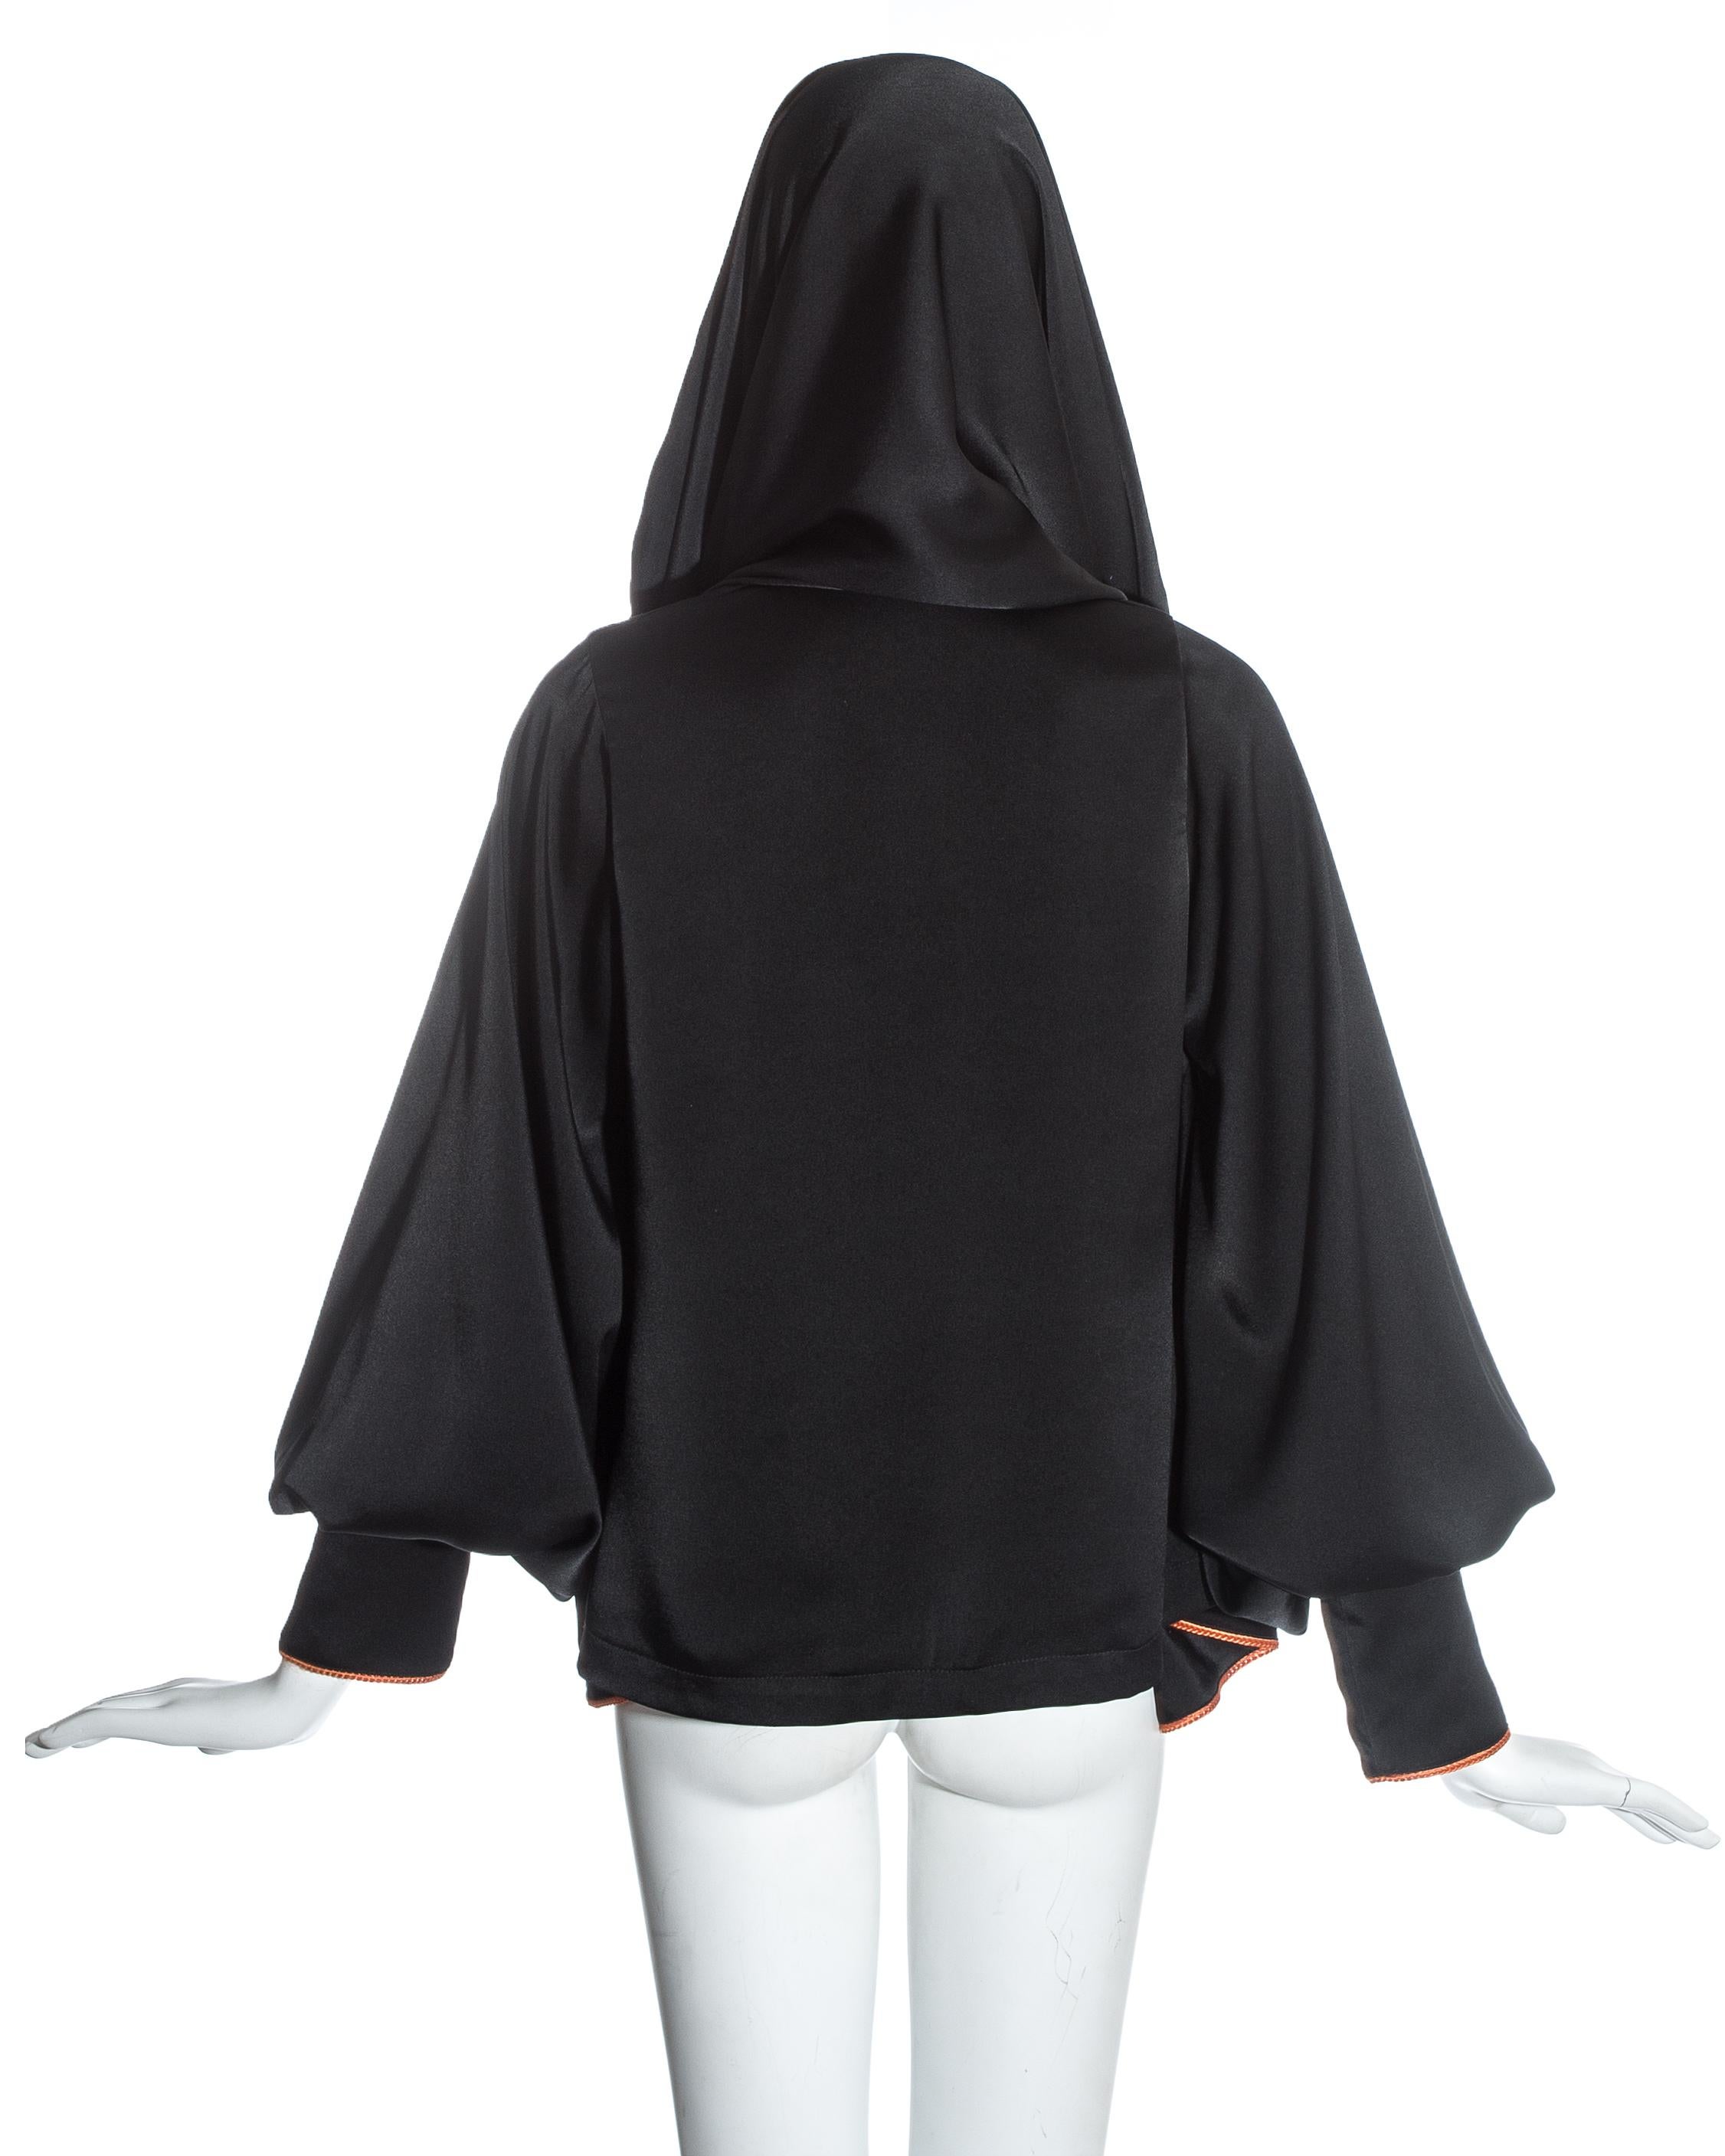 Vivienne Westwood black satin hooded bolero jacket with orange trim, ss 1993 2